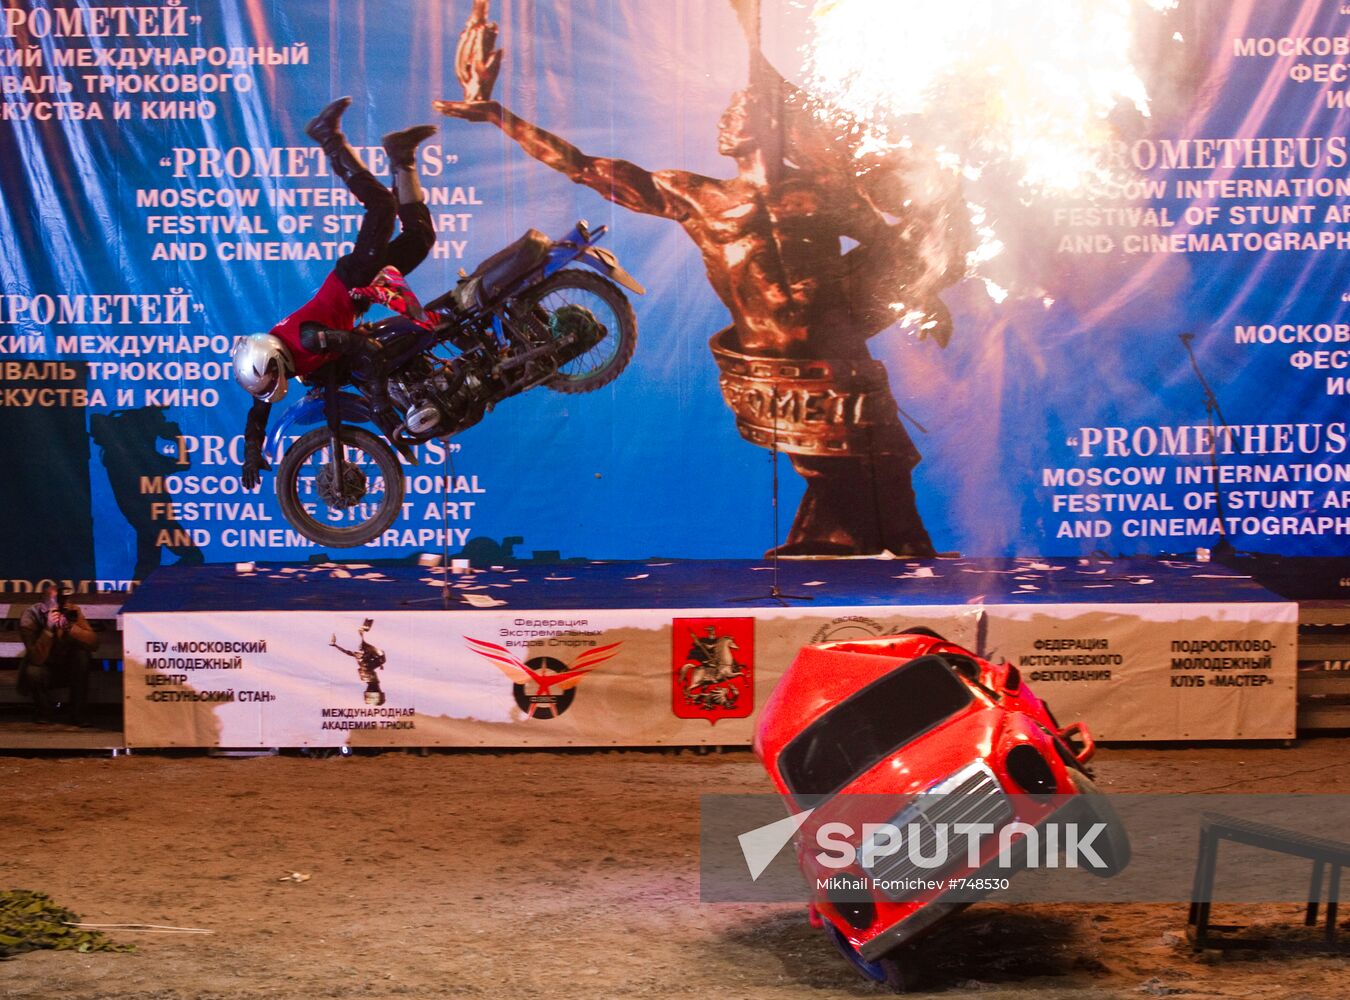 Prometheus Stunt Festival